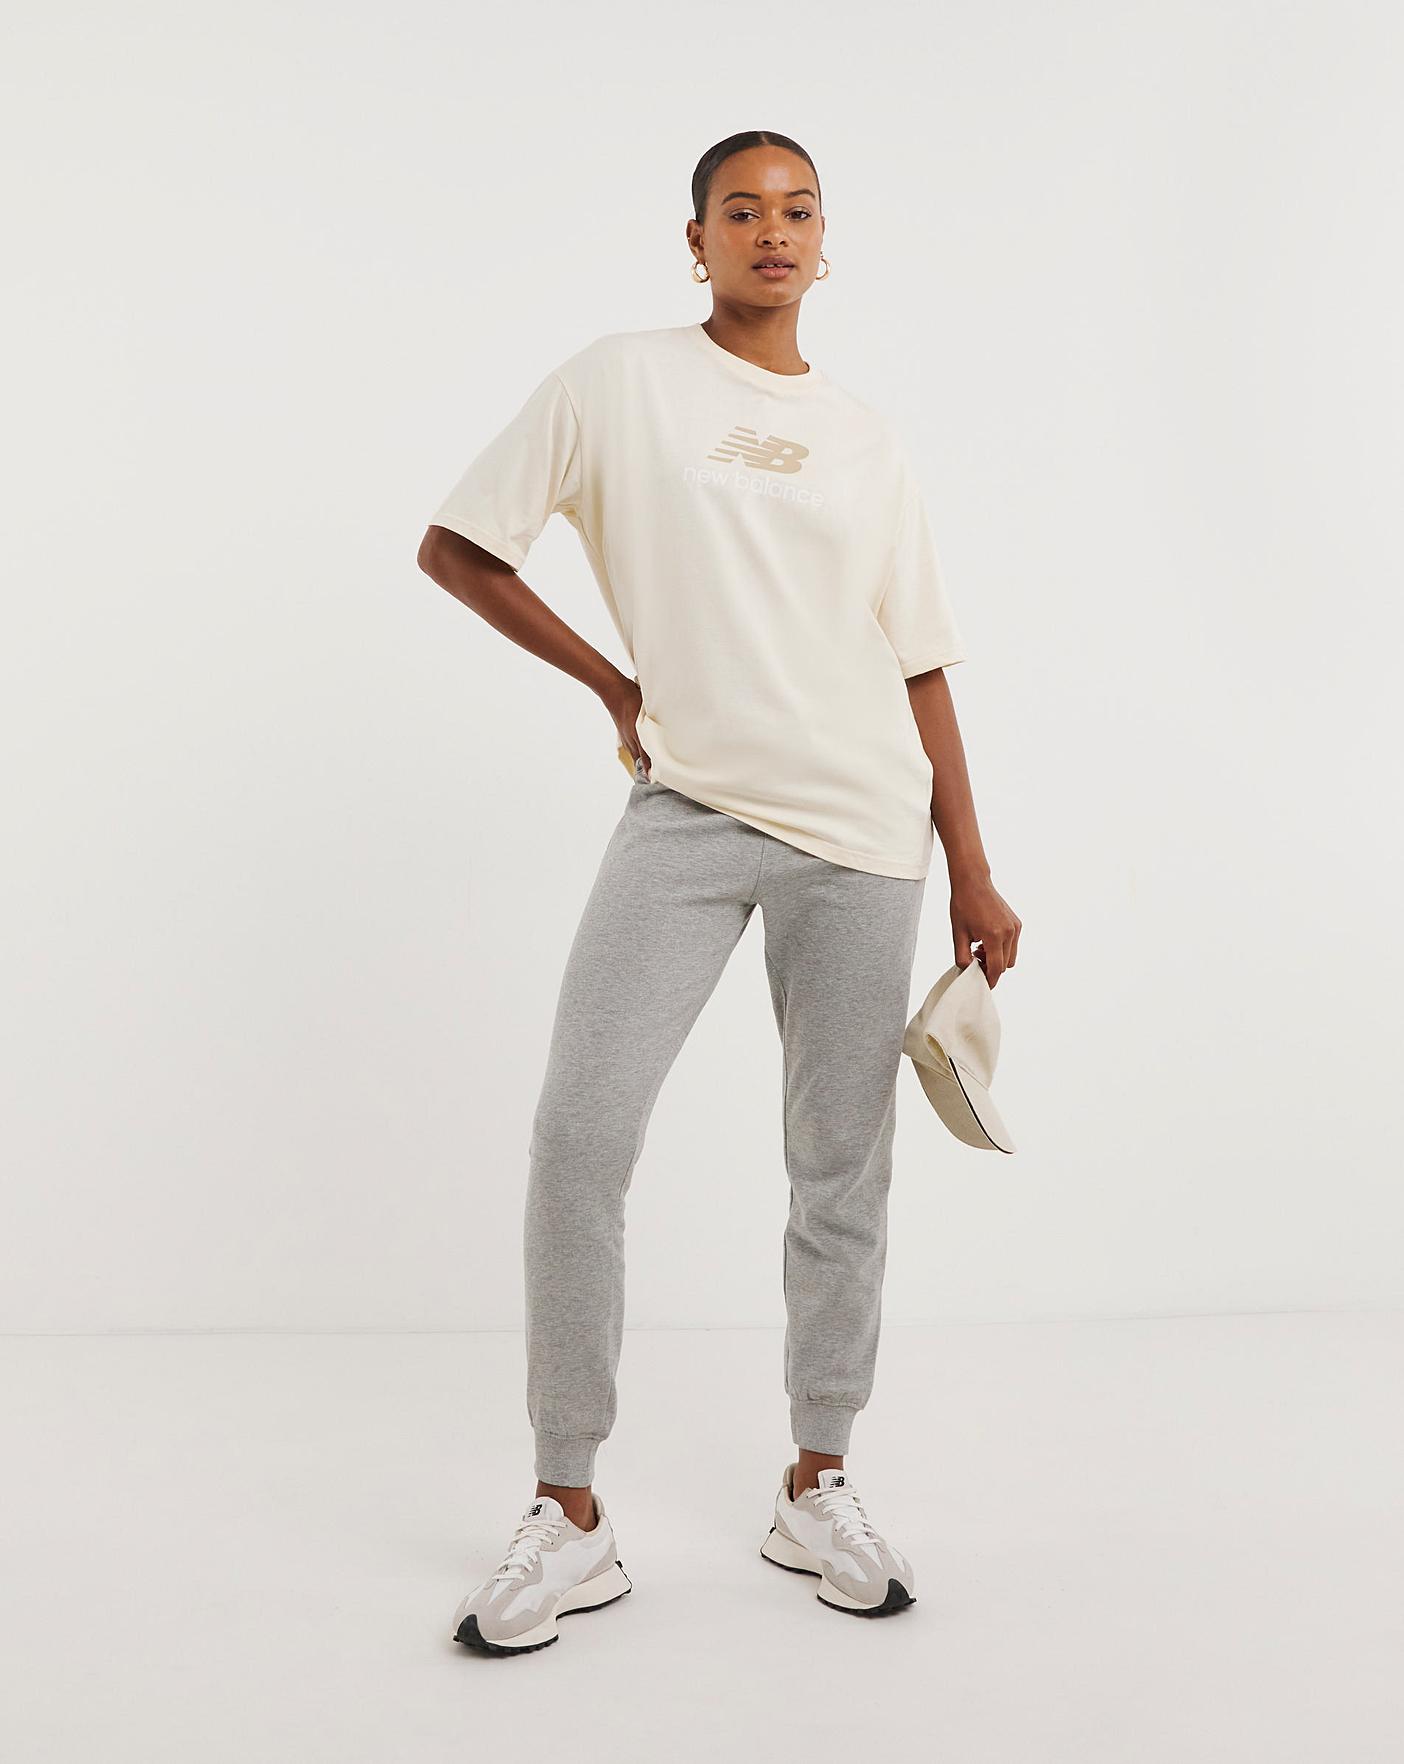 New Balance Essentials Logo Short Sleeve T-Shirt Grey - S